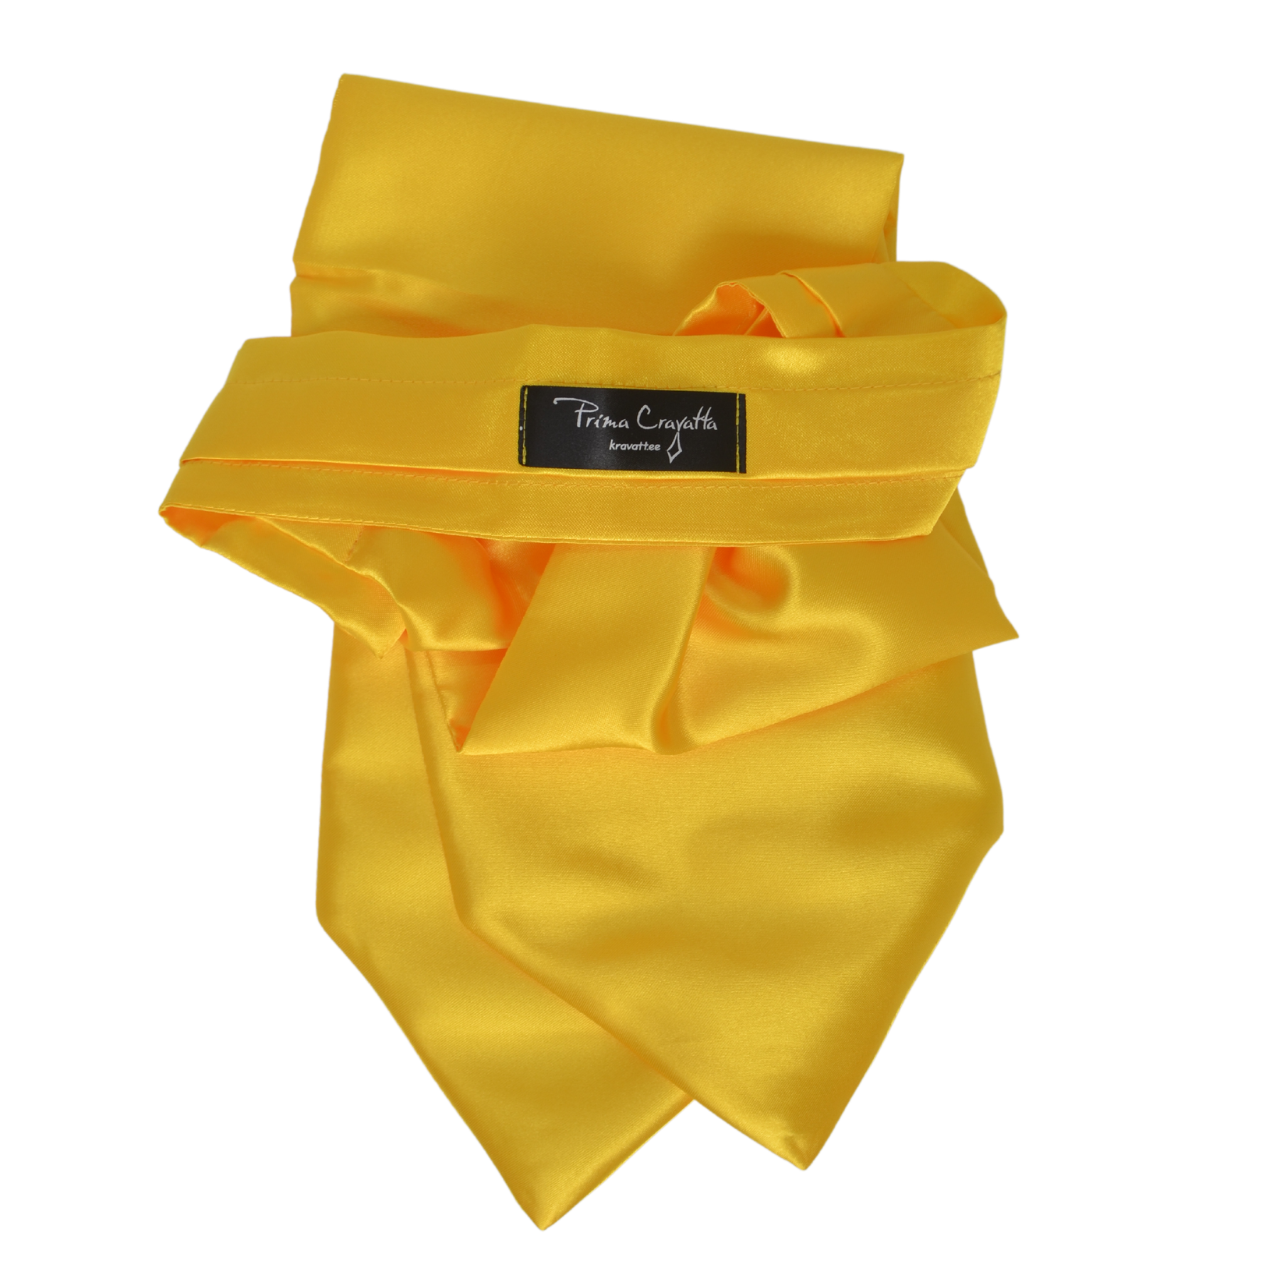 Prima Cravatta klassikaline pikk Soft sarja kuuluv erkkollane meeste kravatt David Barrie